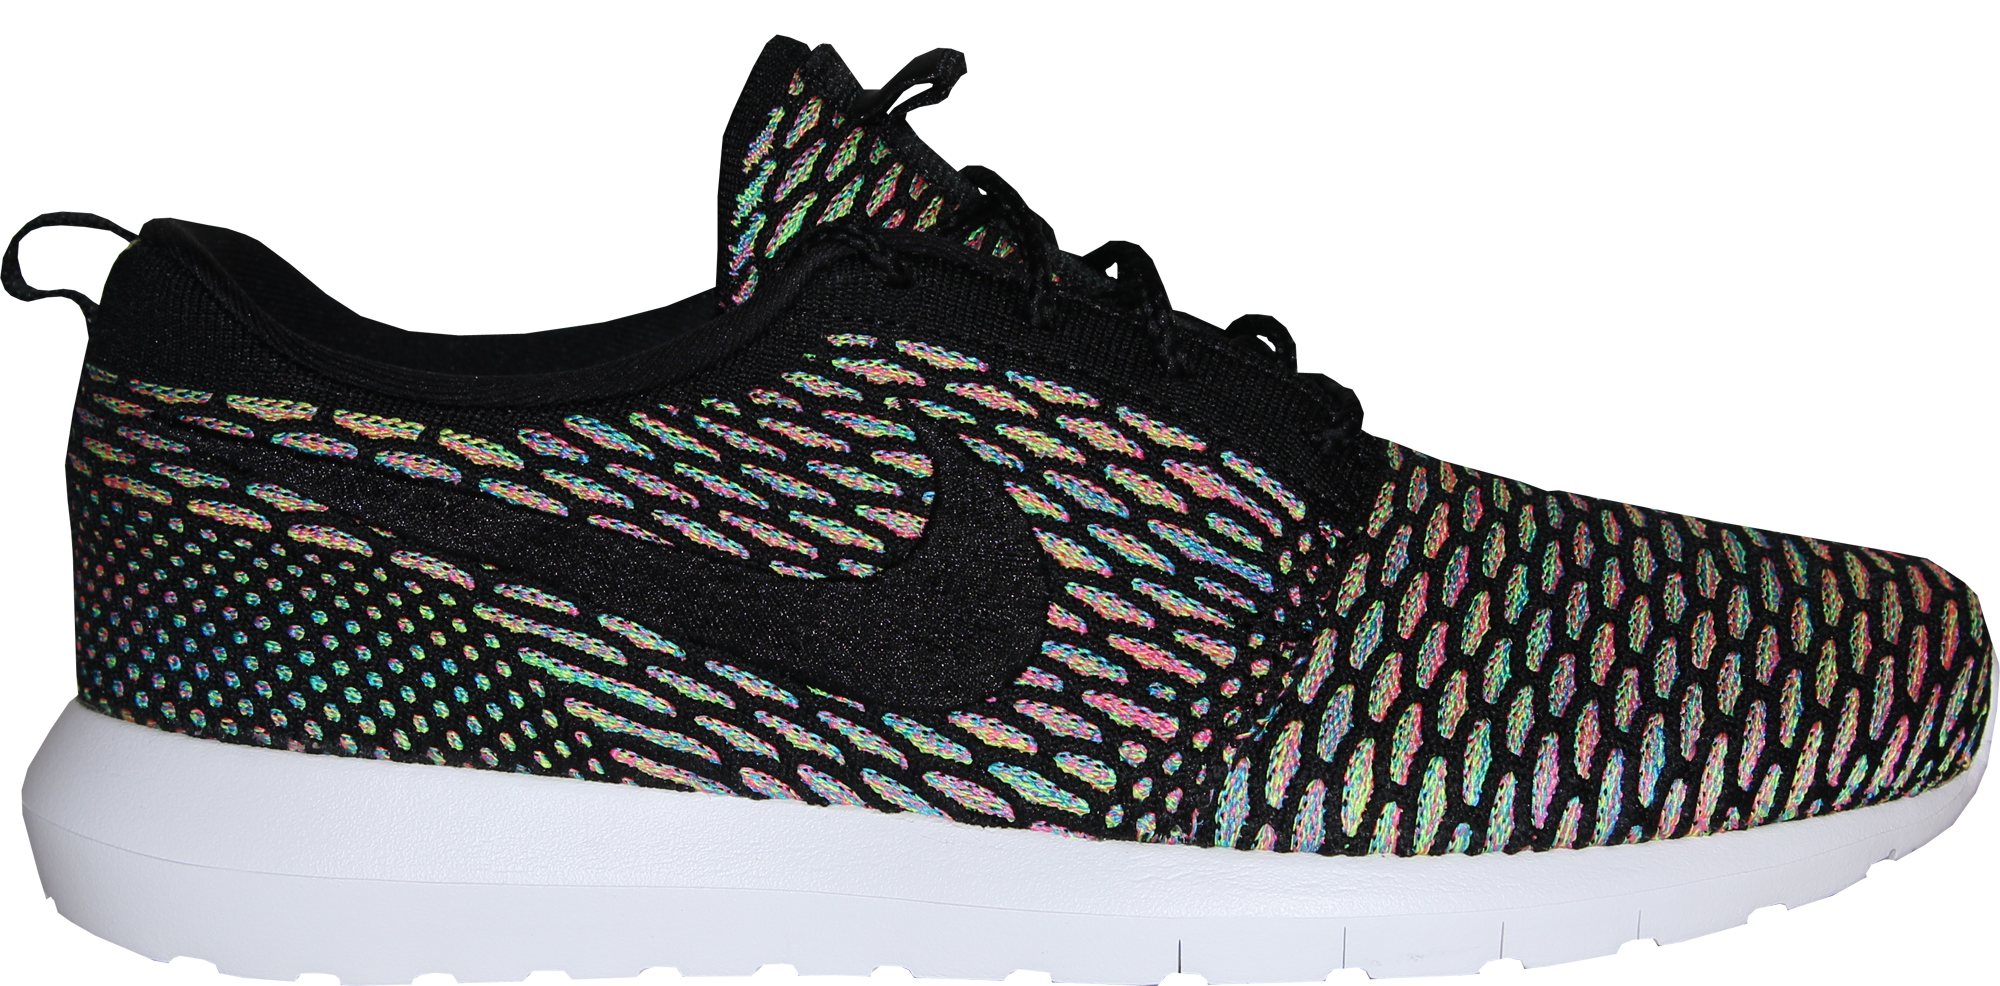 Nike Roshe Run Flyknit Multi-Color 